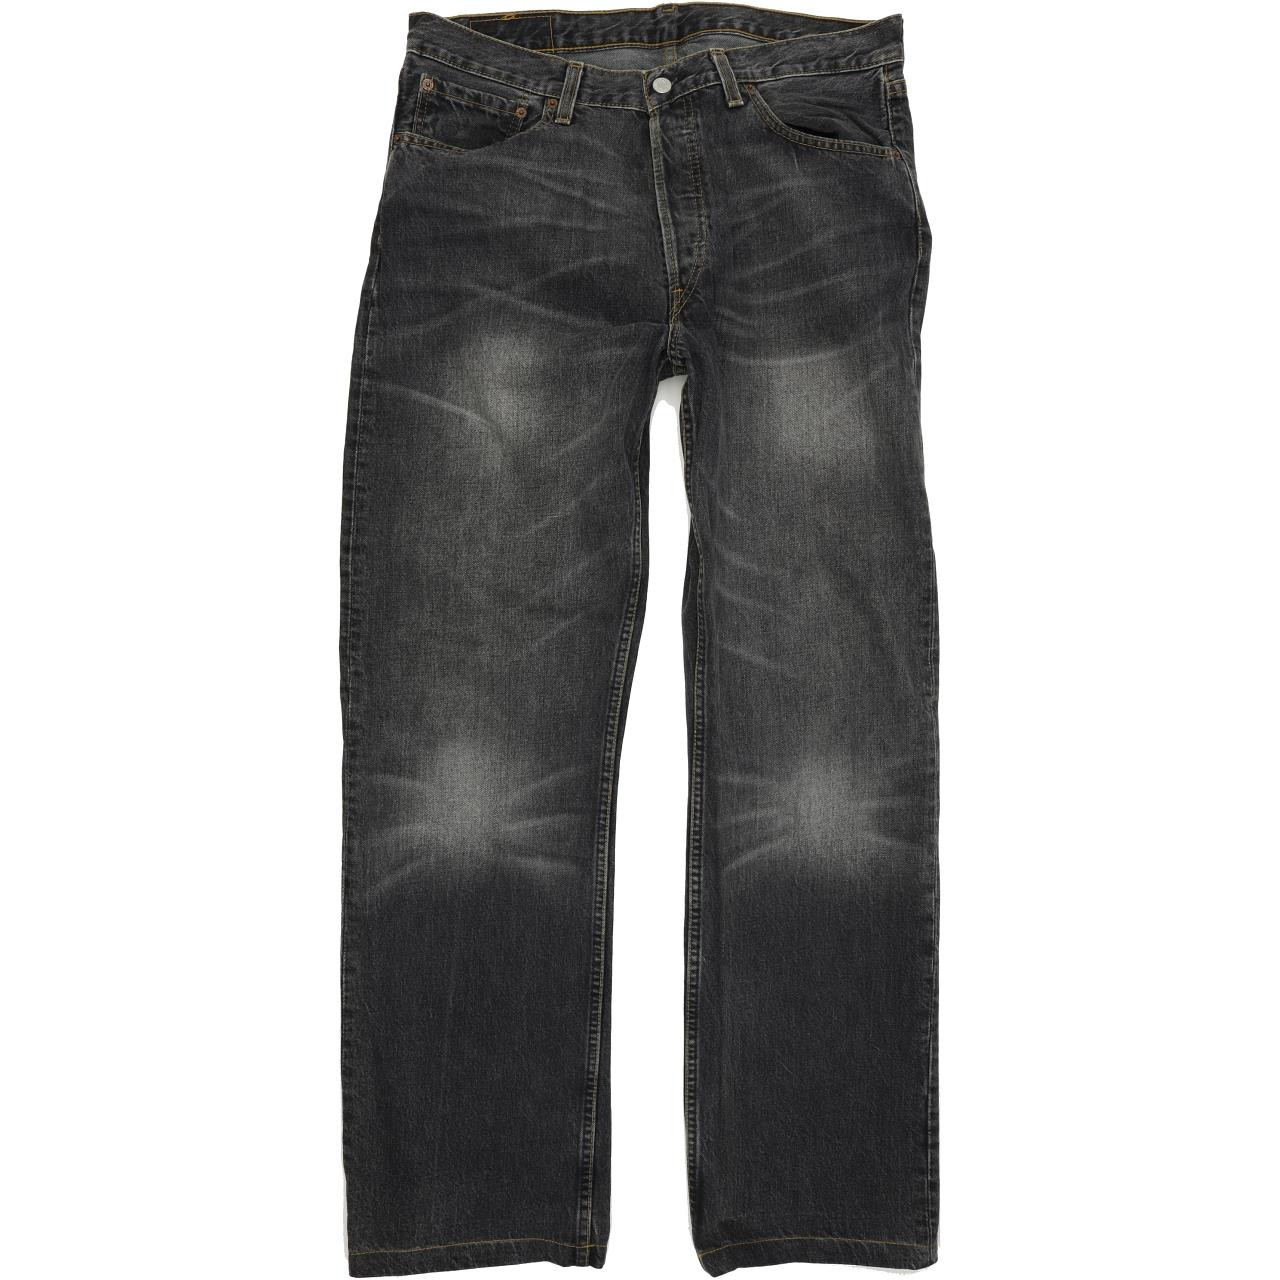 Levi's 508 Men Charcoal Straight Regular Jeans W33 L33 | Fabb Fashion